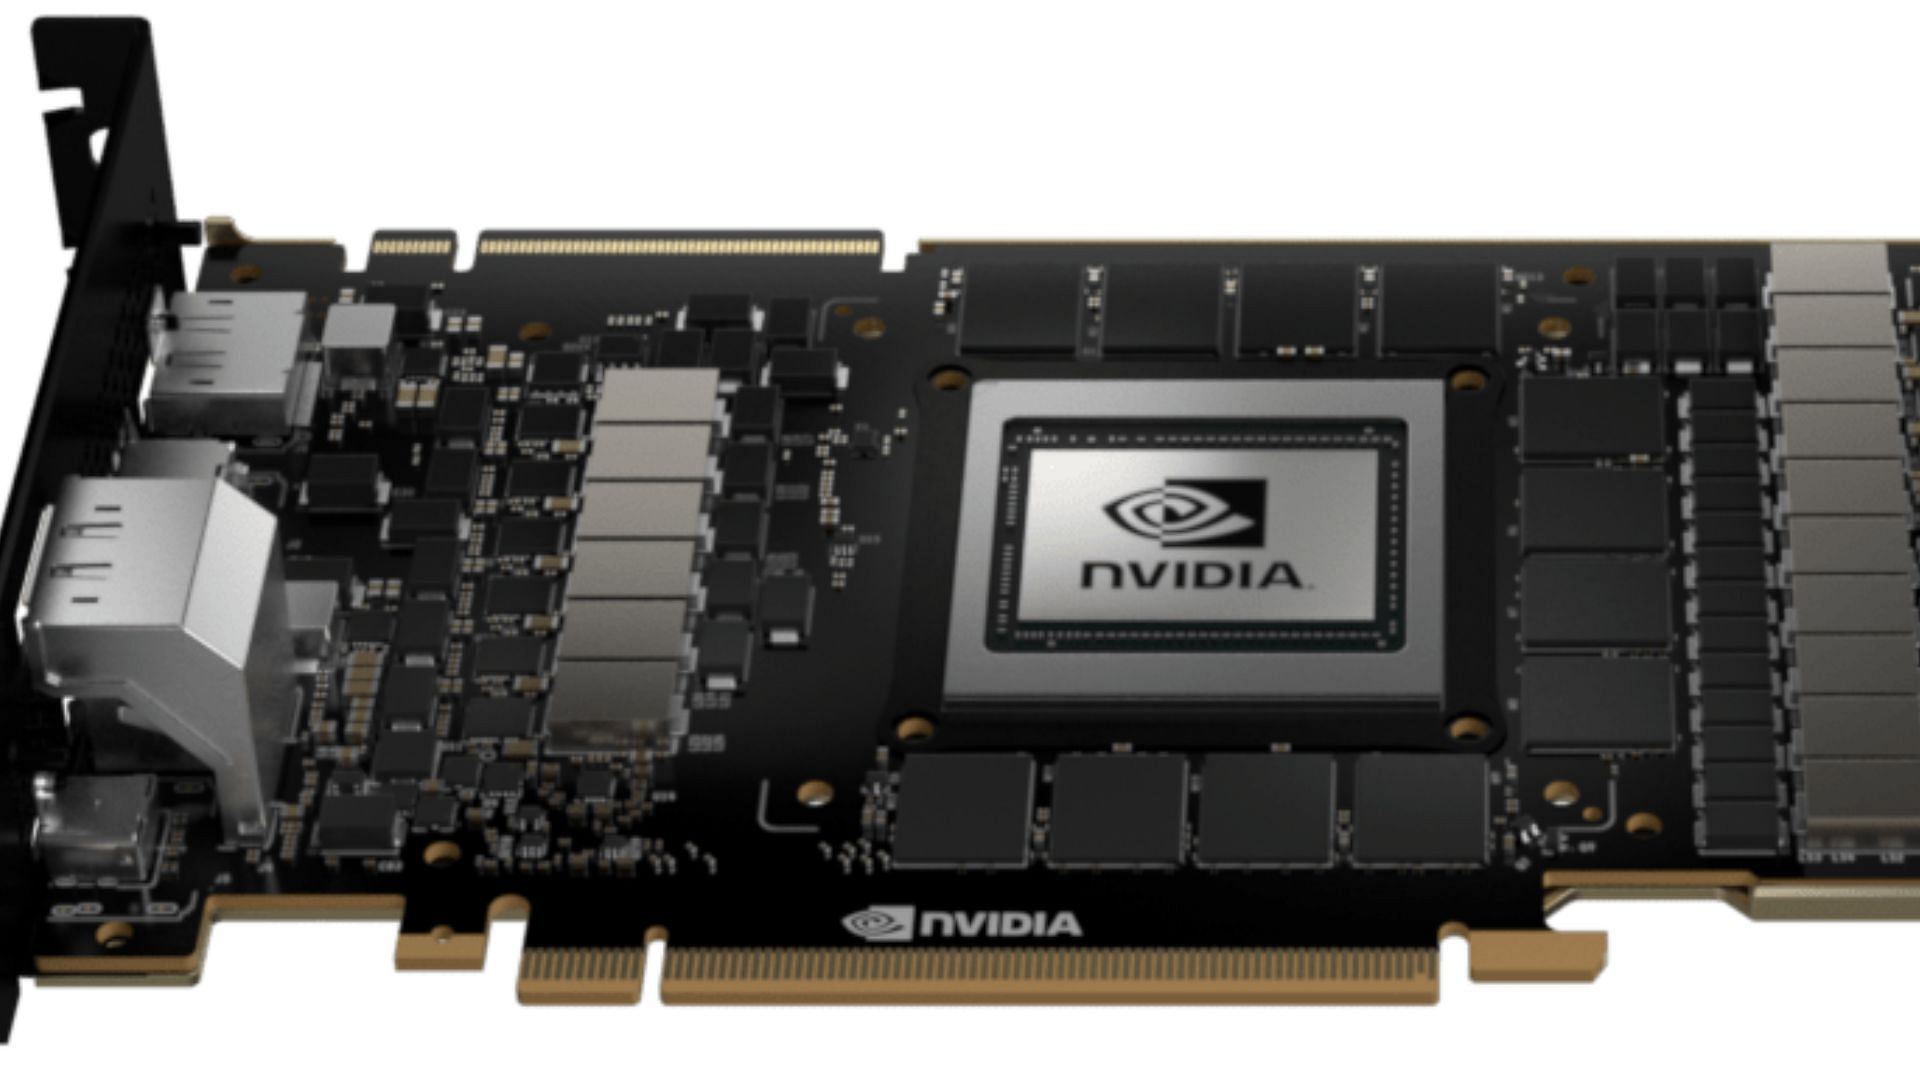 Nvidia GeForce RTX 5000 release date estimate